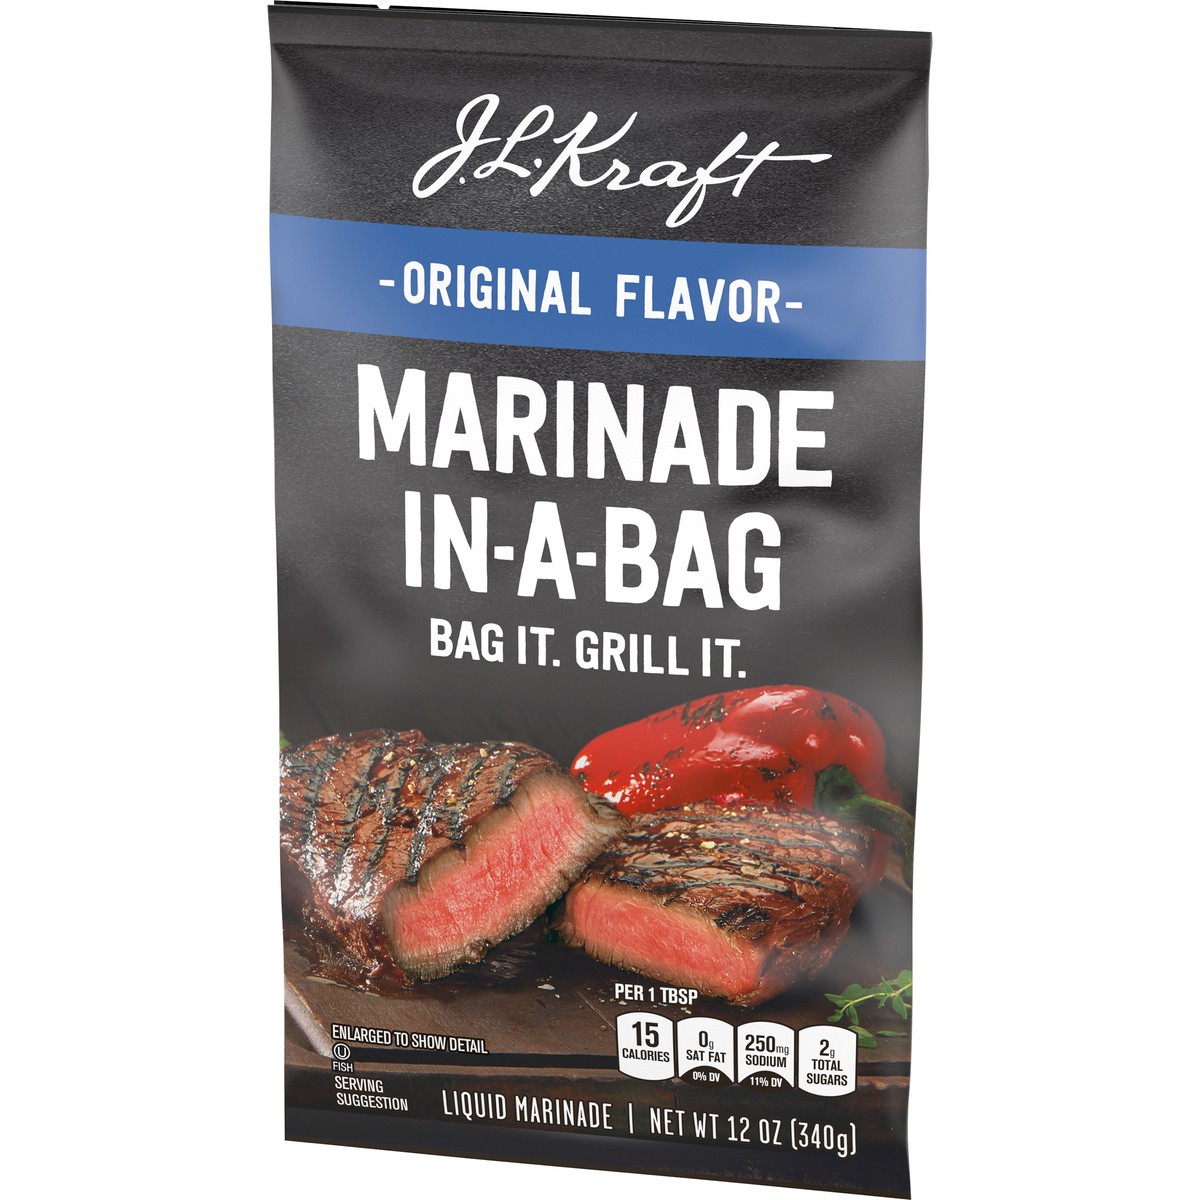 slide 6 of 9, Kraft J.L. Kraft Marinade-In-A-Bag Original Flavor Liquid Marinade, 12 oz Bag, 12 oz